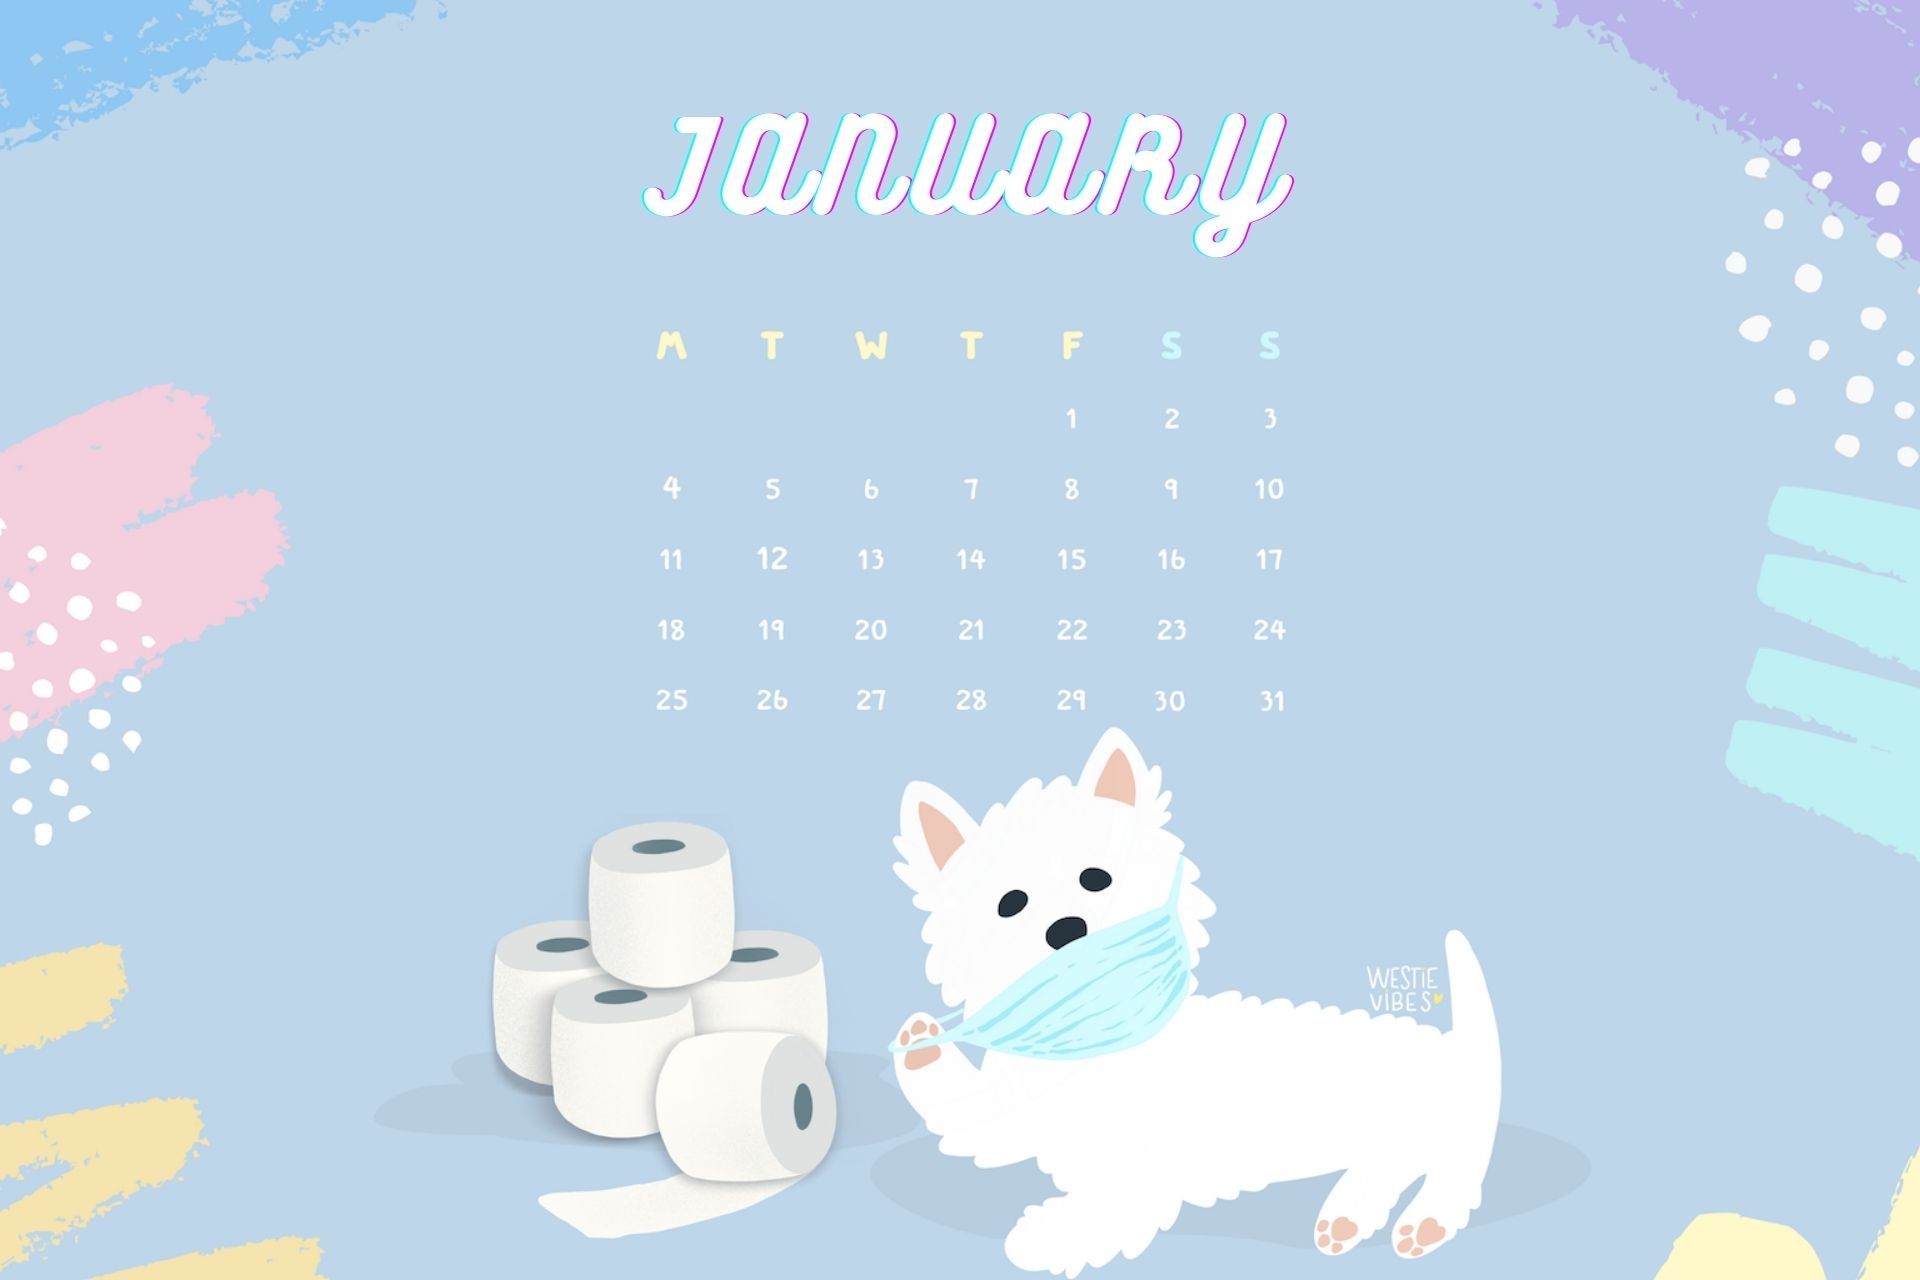 January 2021 Calendar Wallpaper Hd Image ID 4